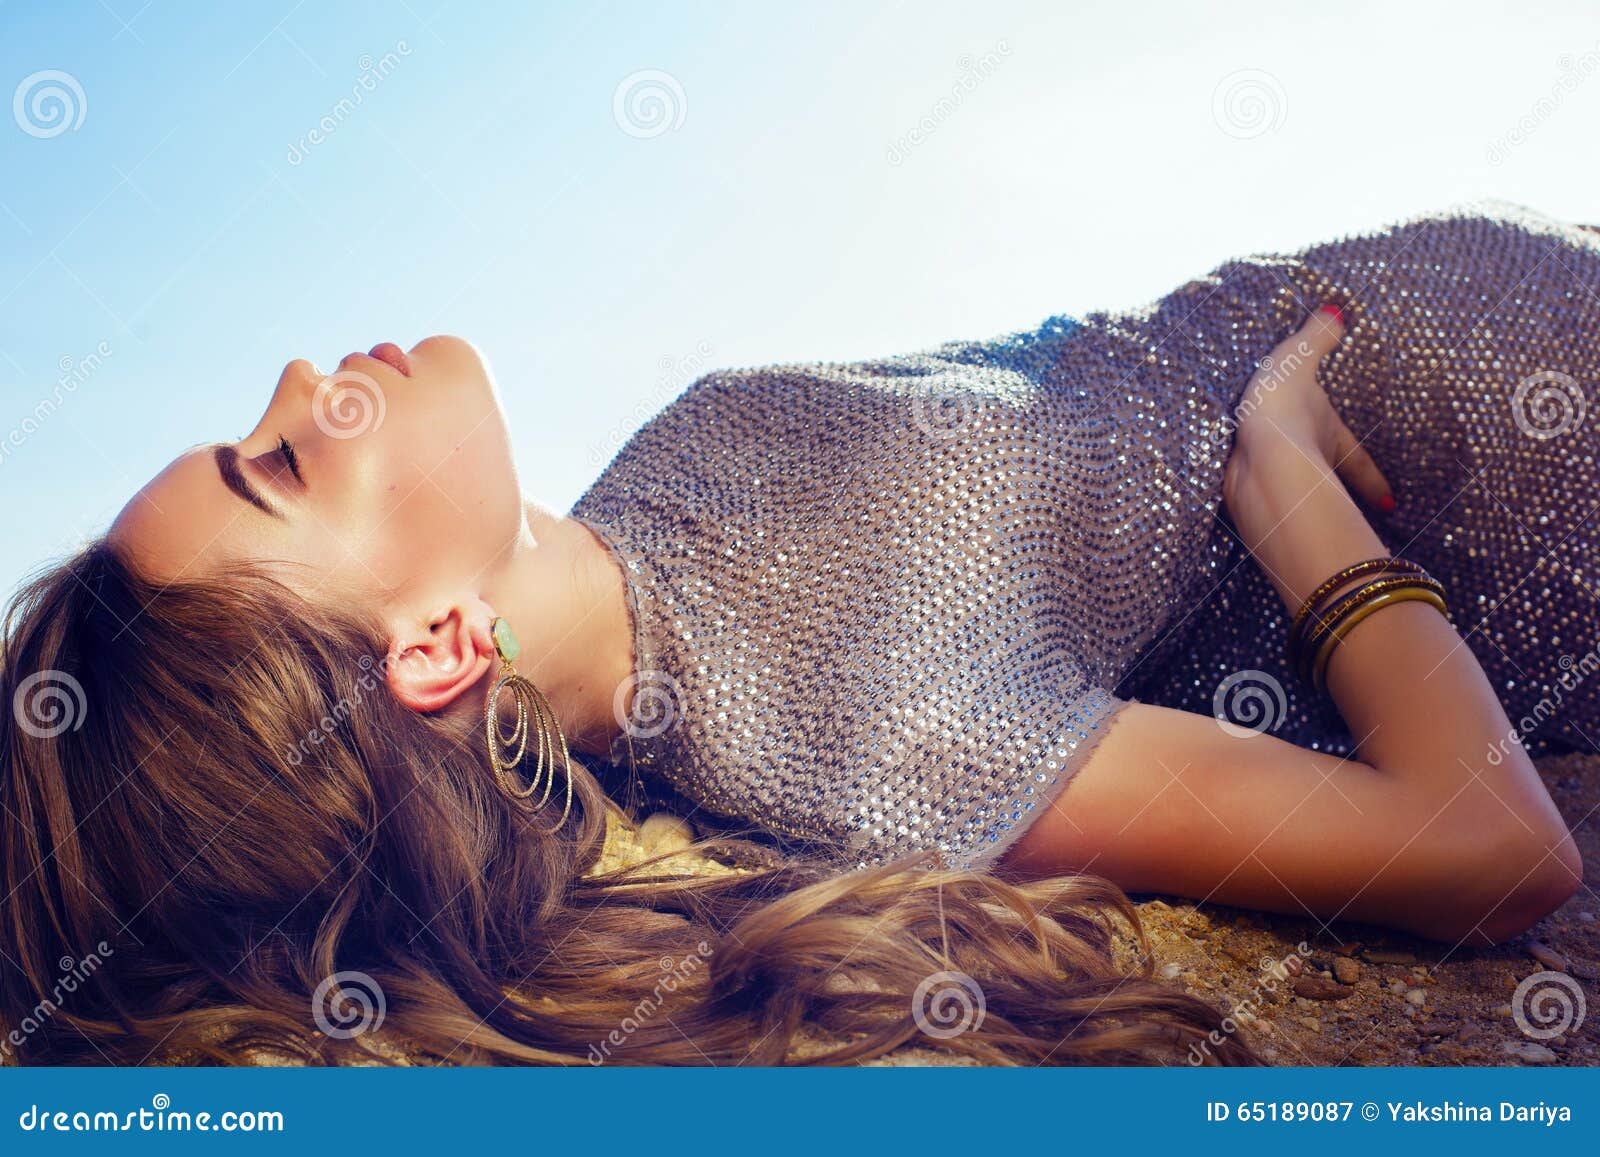 Beautiful Glamour Woman With Dark Hair Posing On Summer Beach Stock